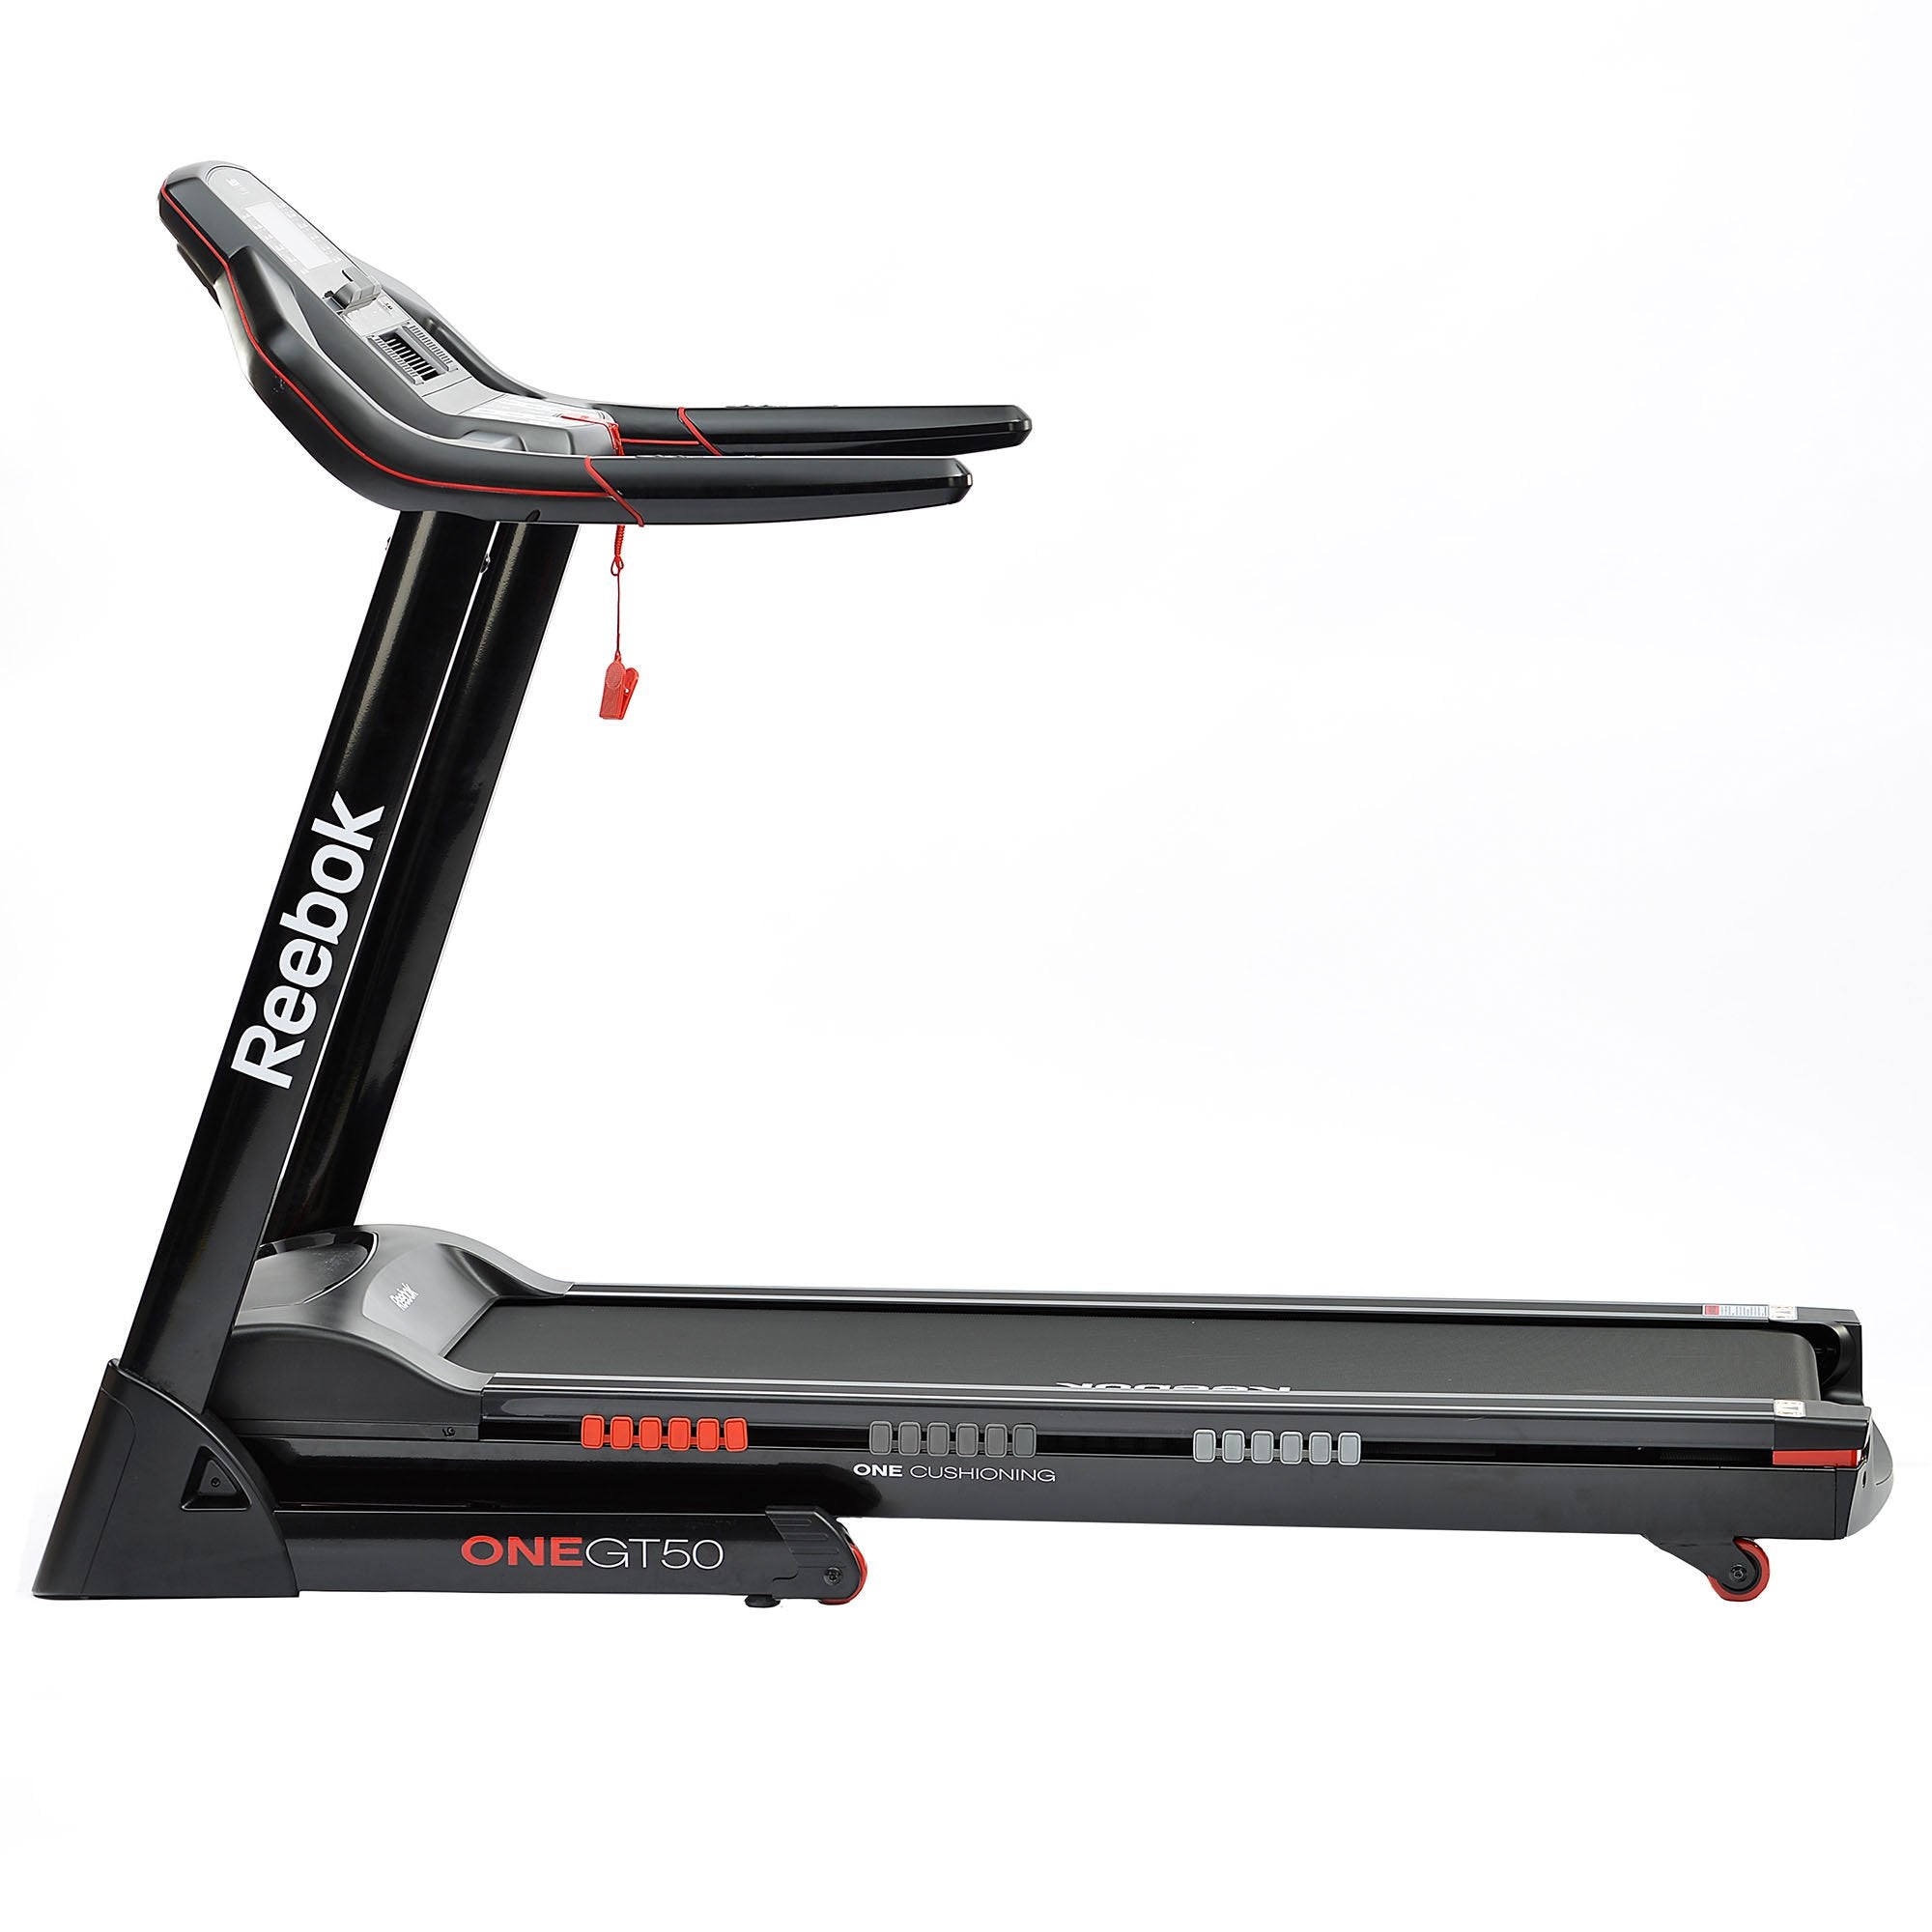 One GT50 Treadmill –